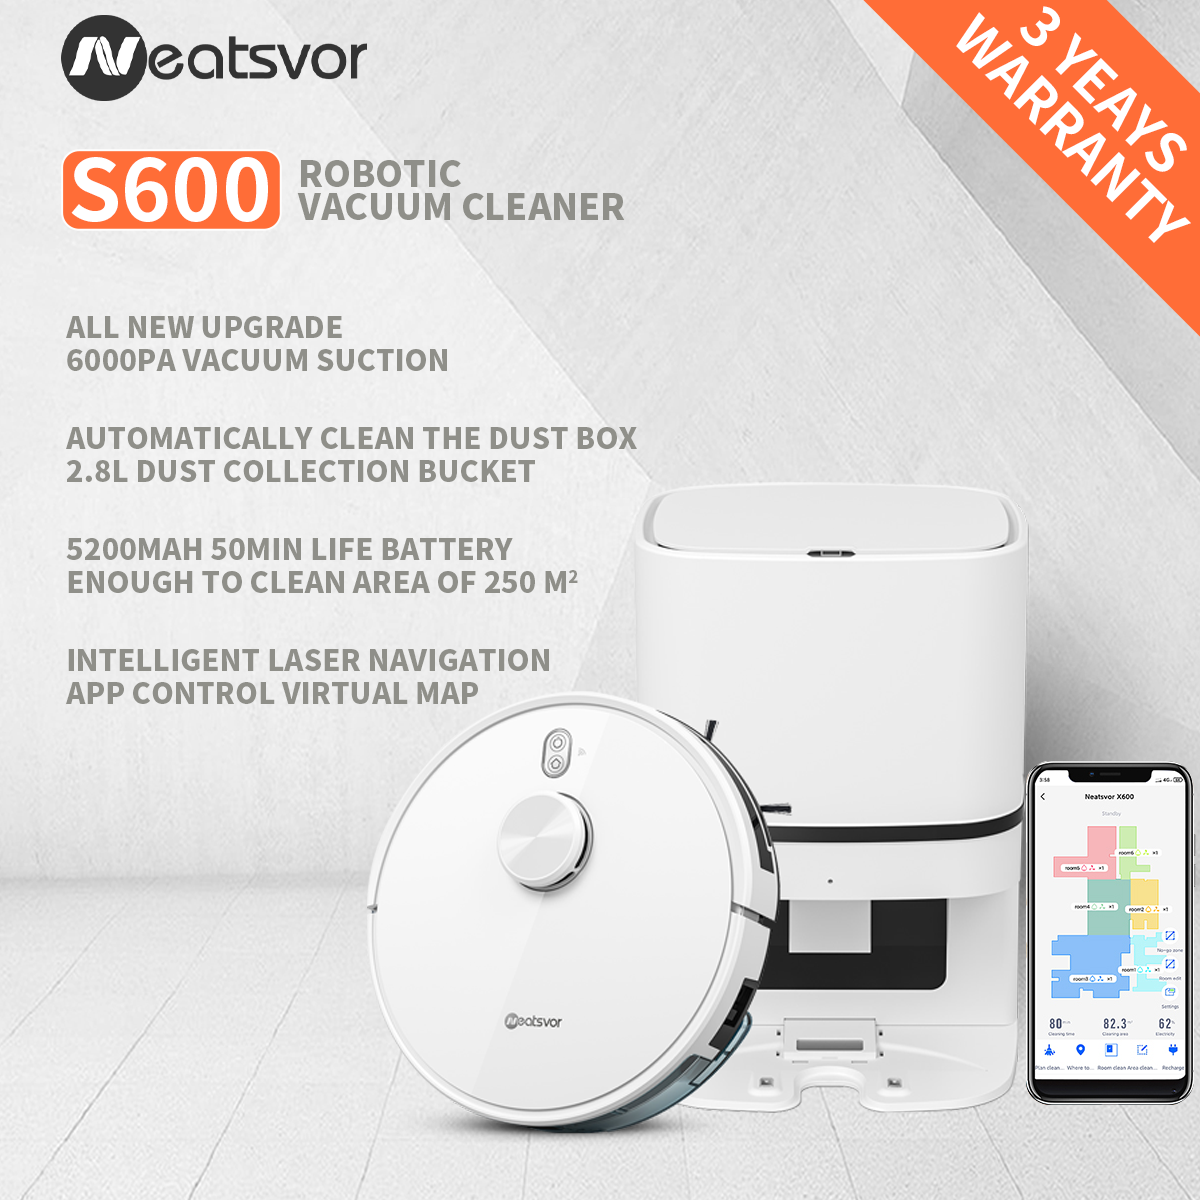 Neatsvor S600 Robot Vacuum Cleaner: Laser Navigation, Wet Washing